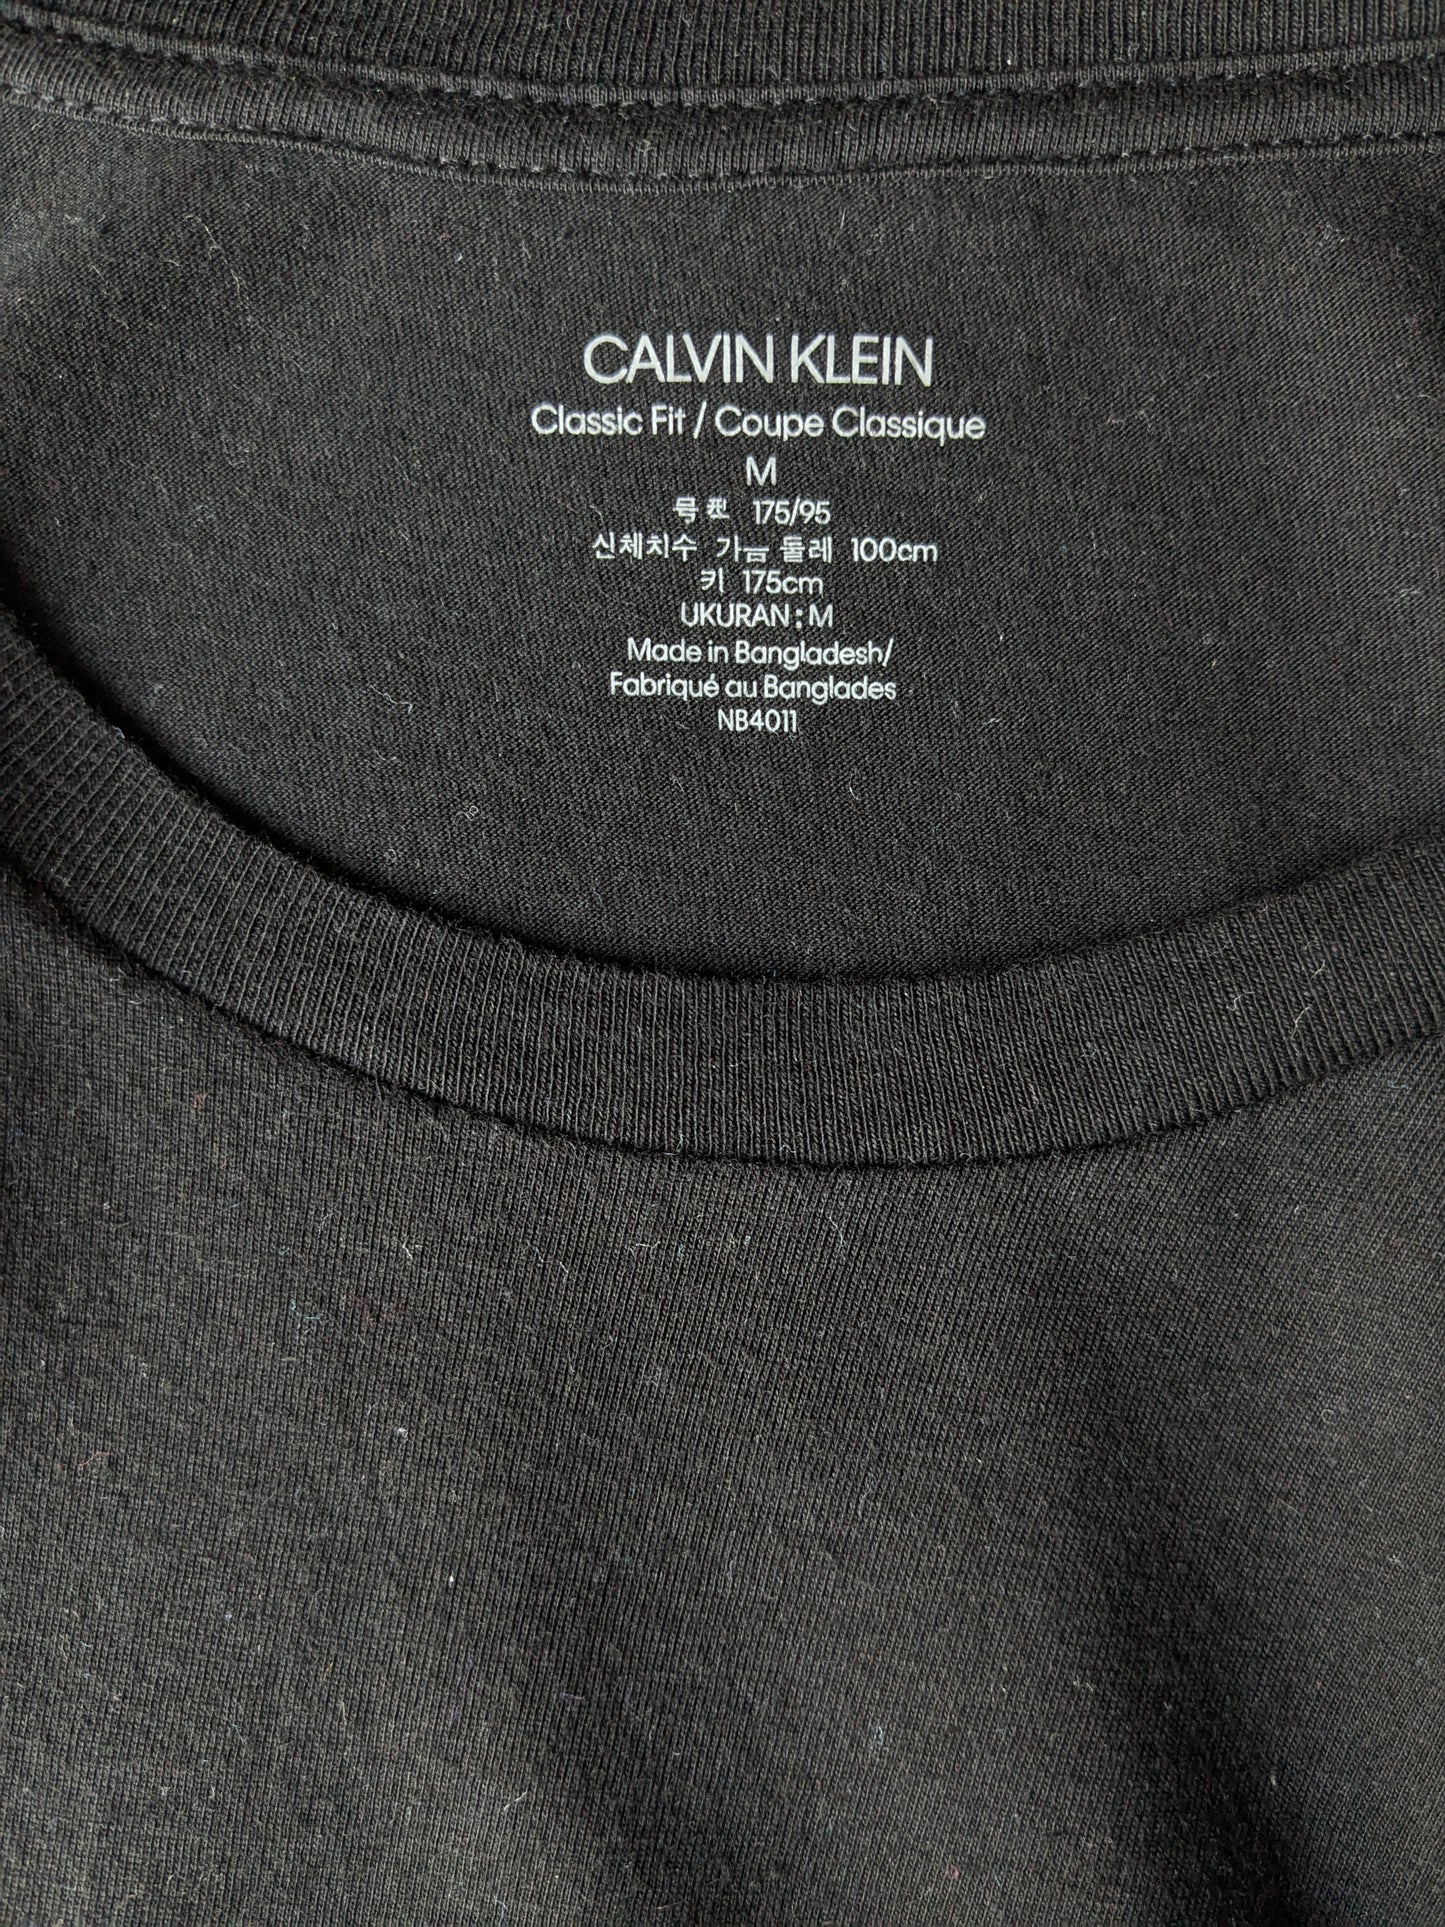 Calvin small shirt. Black colored. Size M.